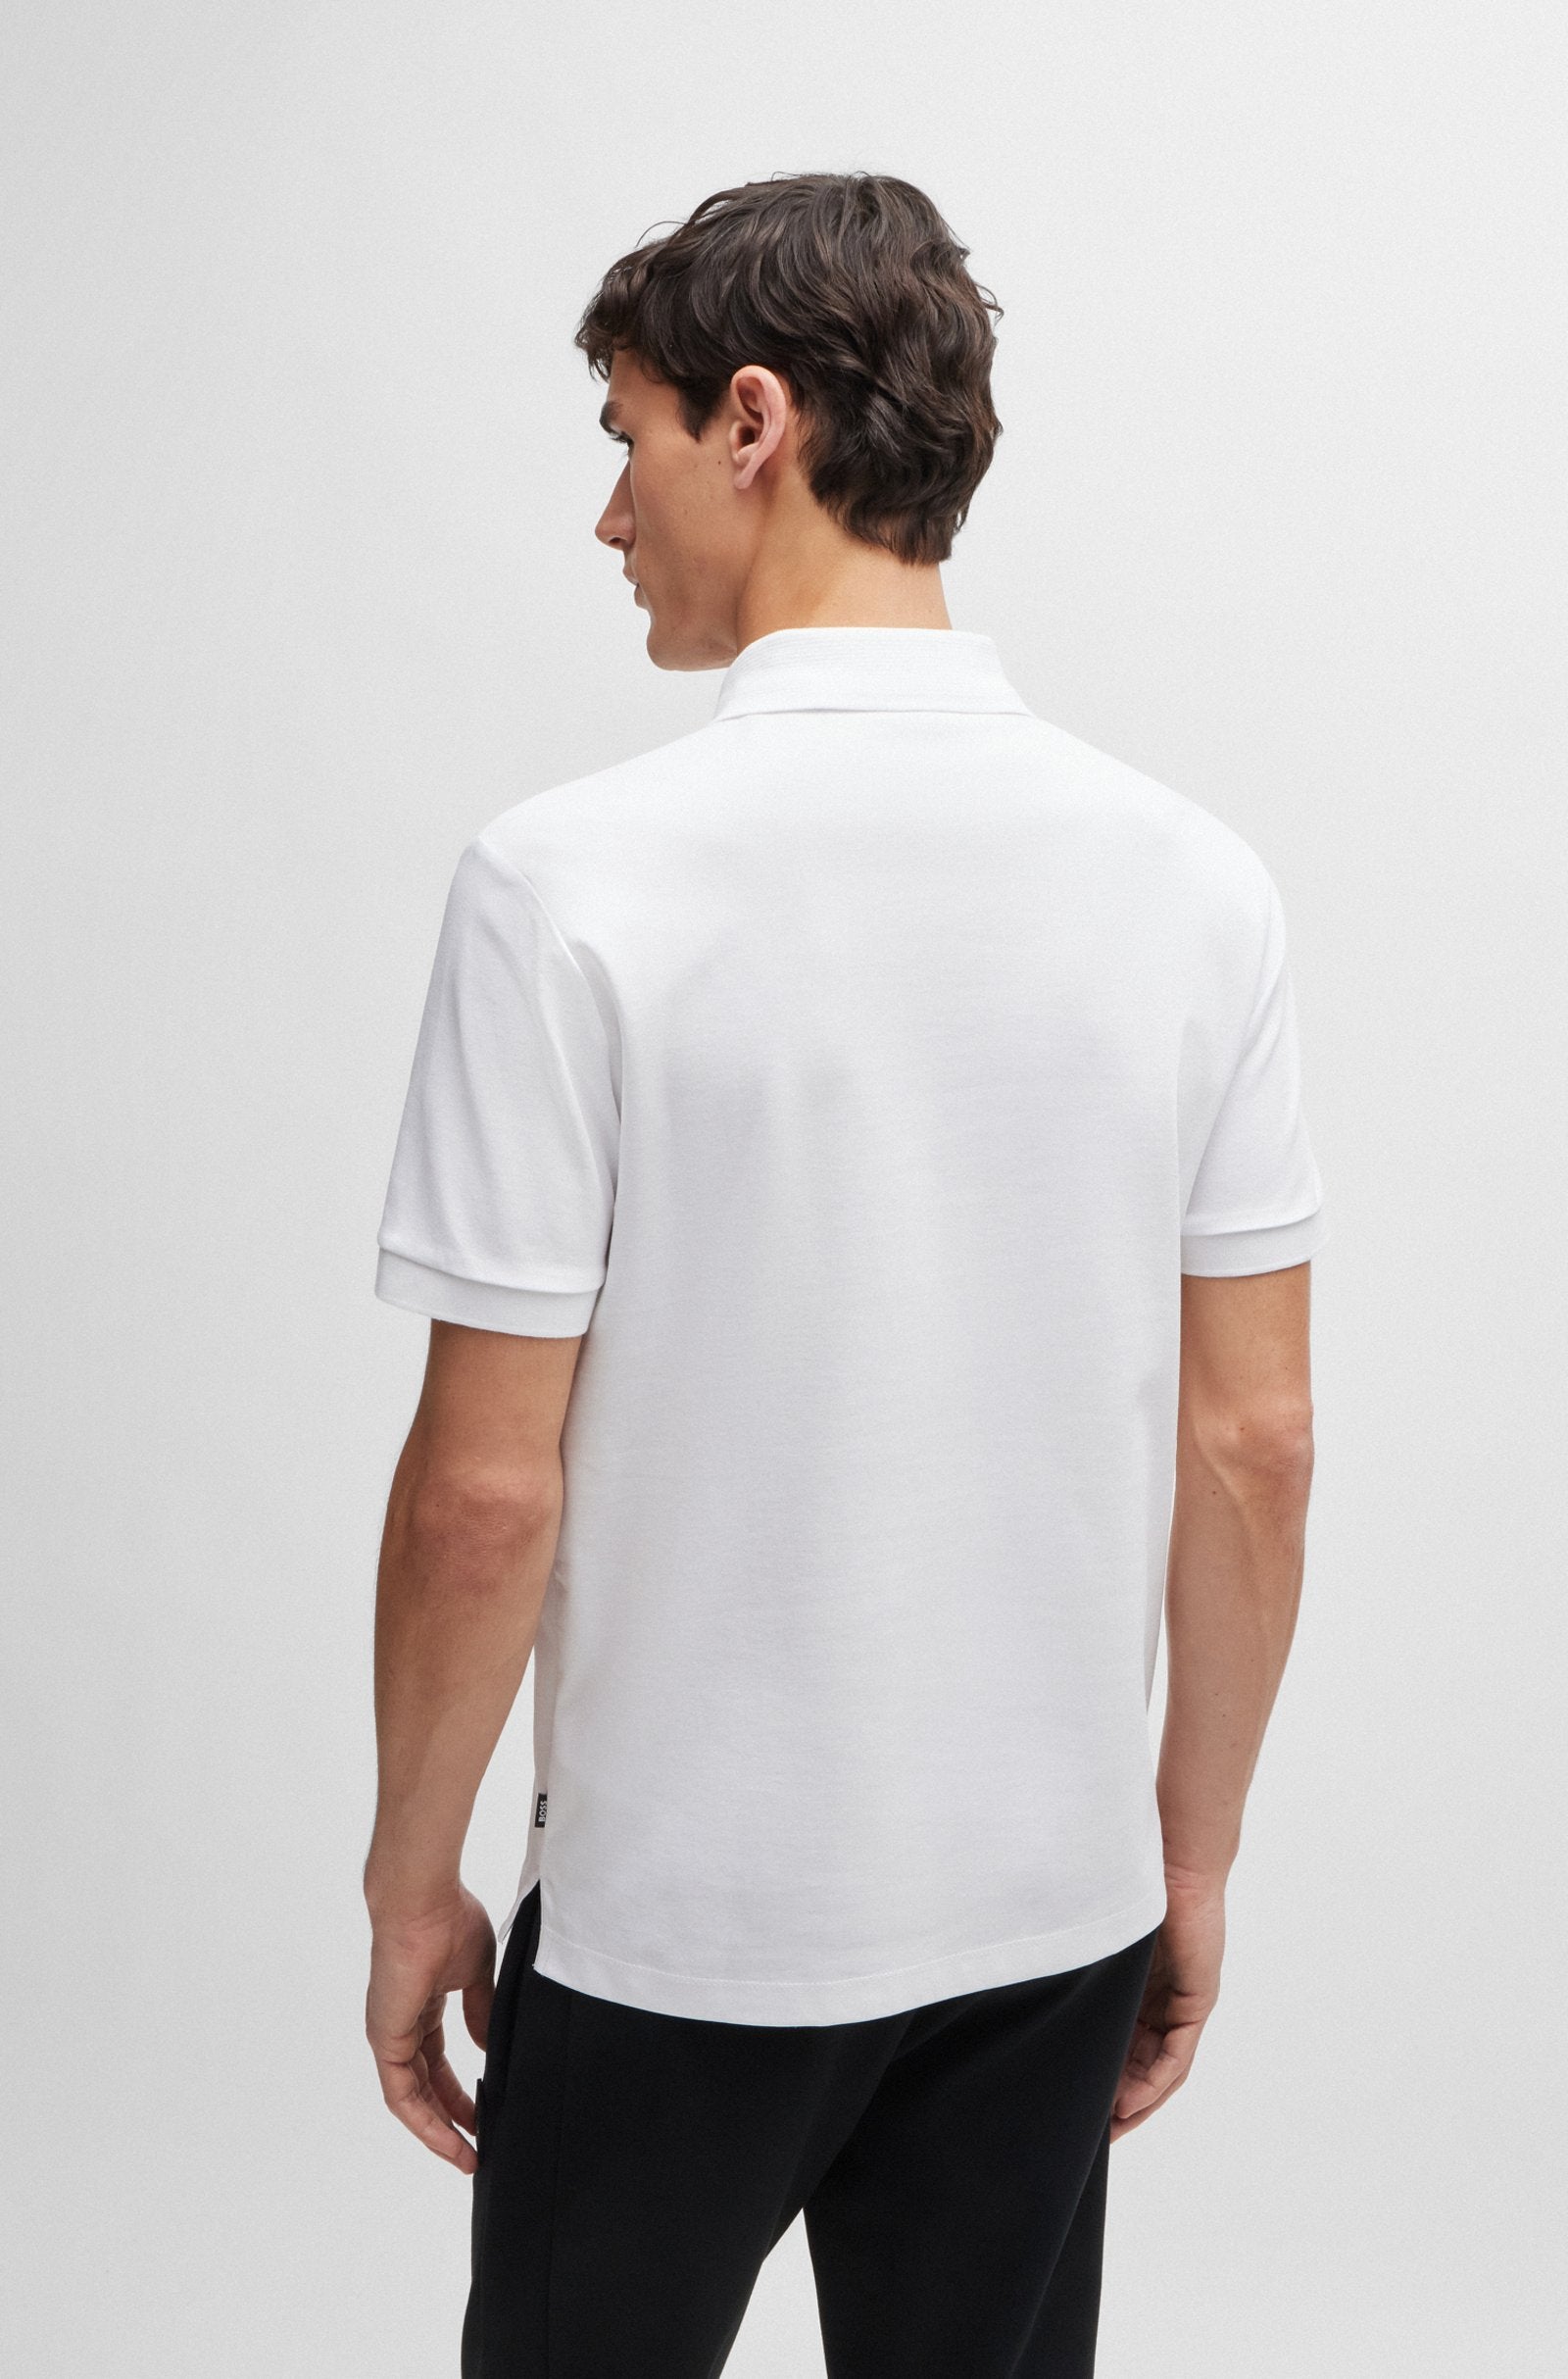 BOSS Black Parlay 143 Polo Shirt 10259994 100 White